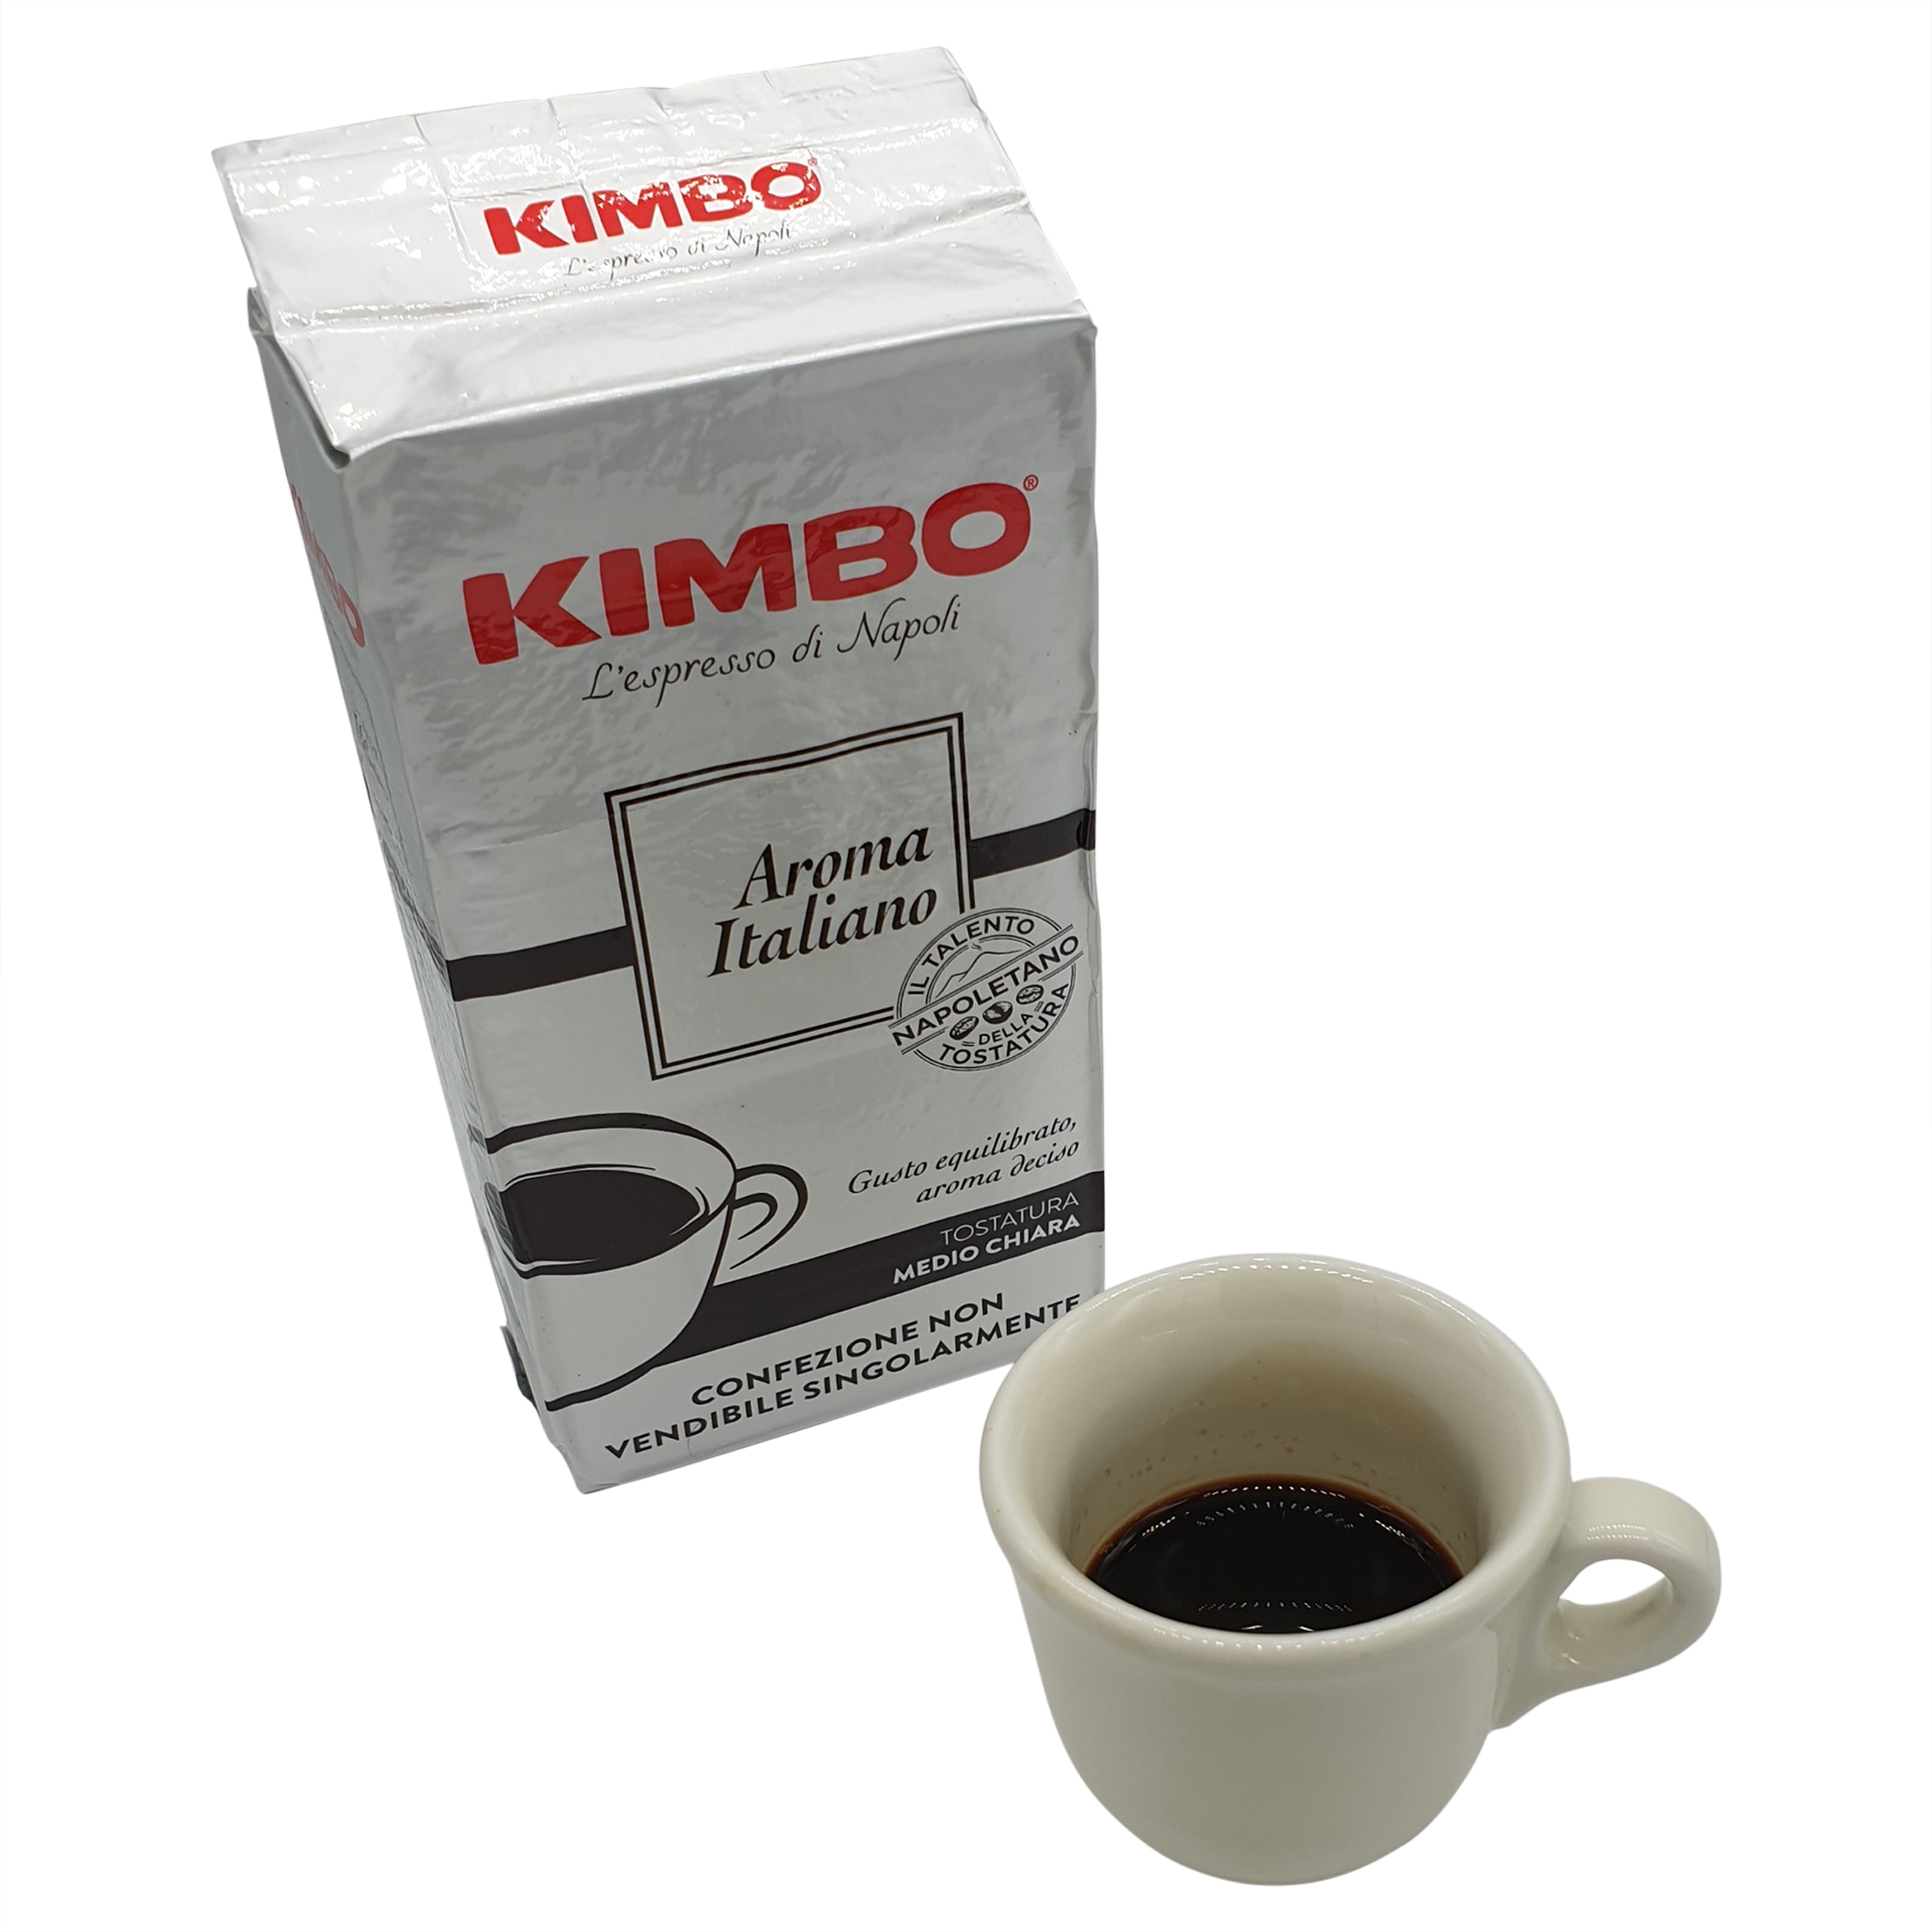 Kimbo Espresso, Kimbo, Kimbo, Aroma Italiano Conf. 2X250 G, Kimbo  Espresso Ground